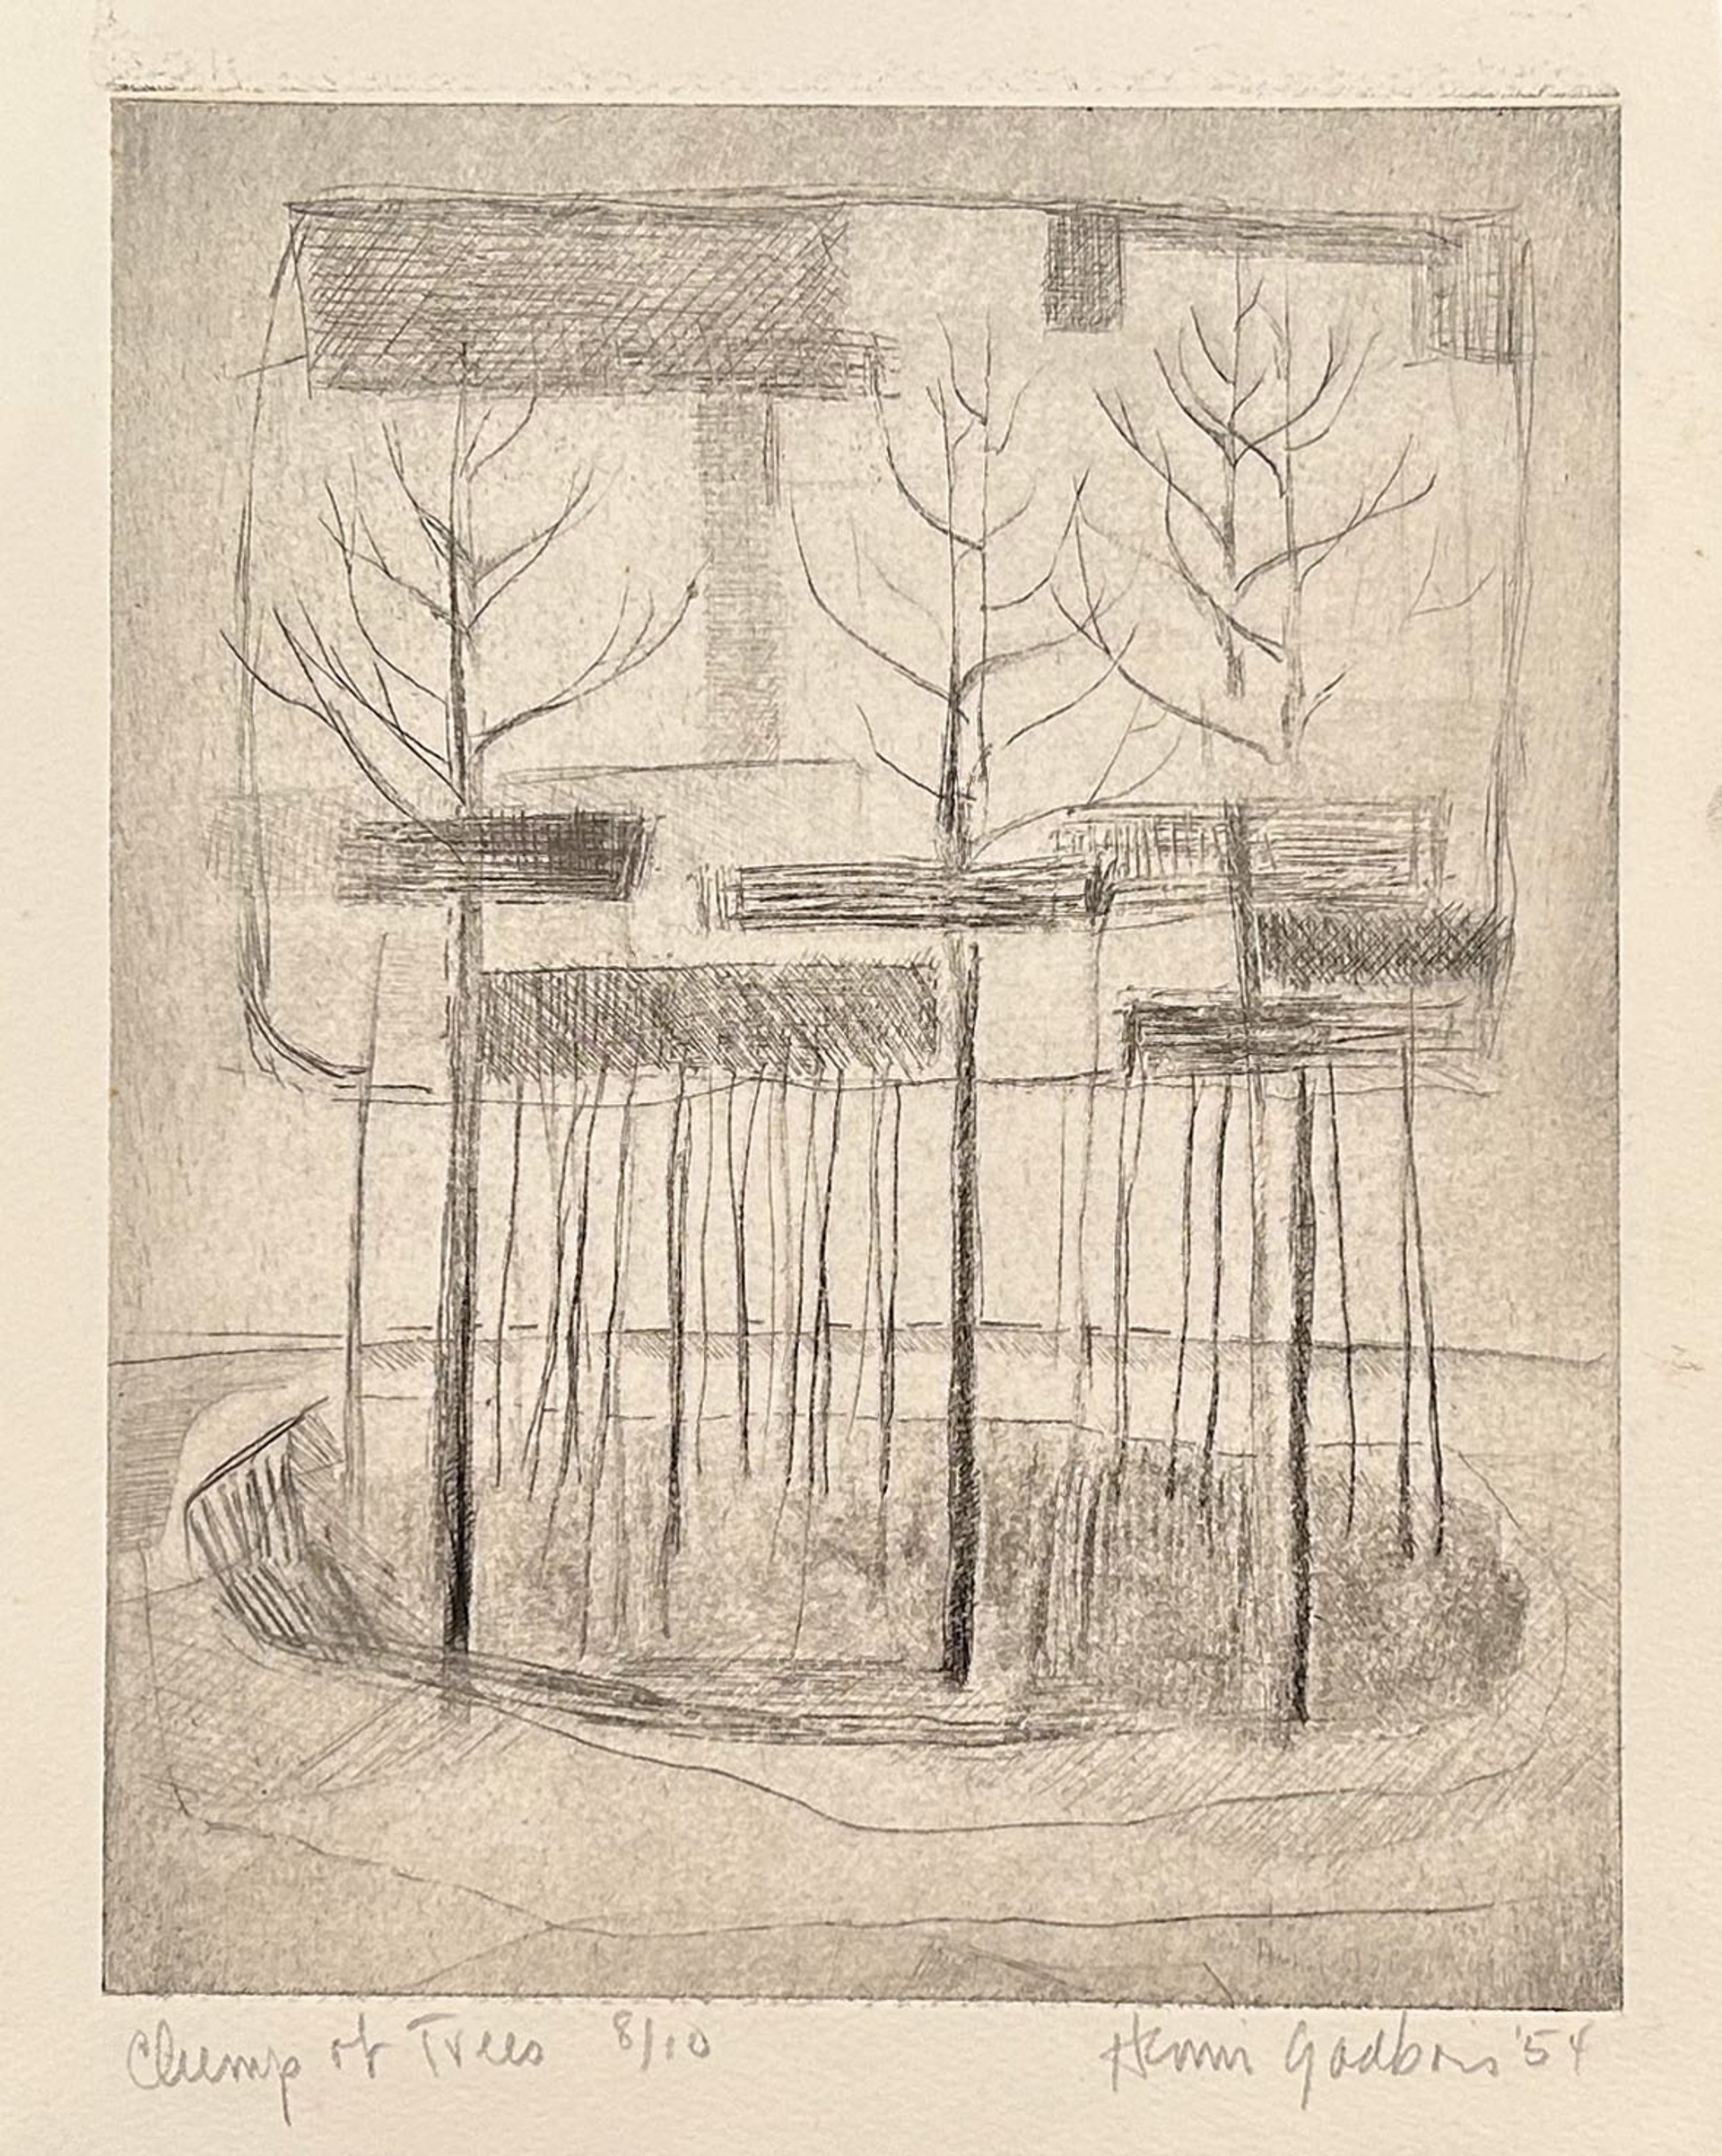 Clump of Trees by Henri Gadbois